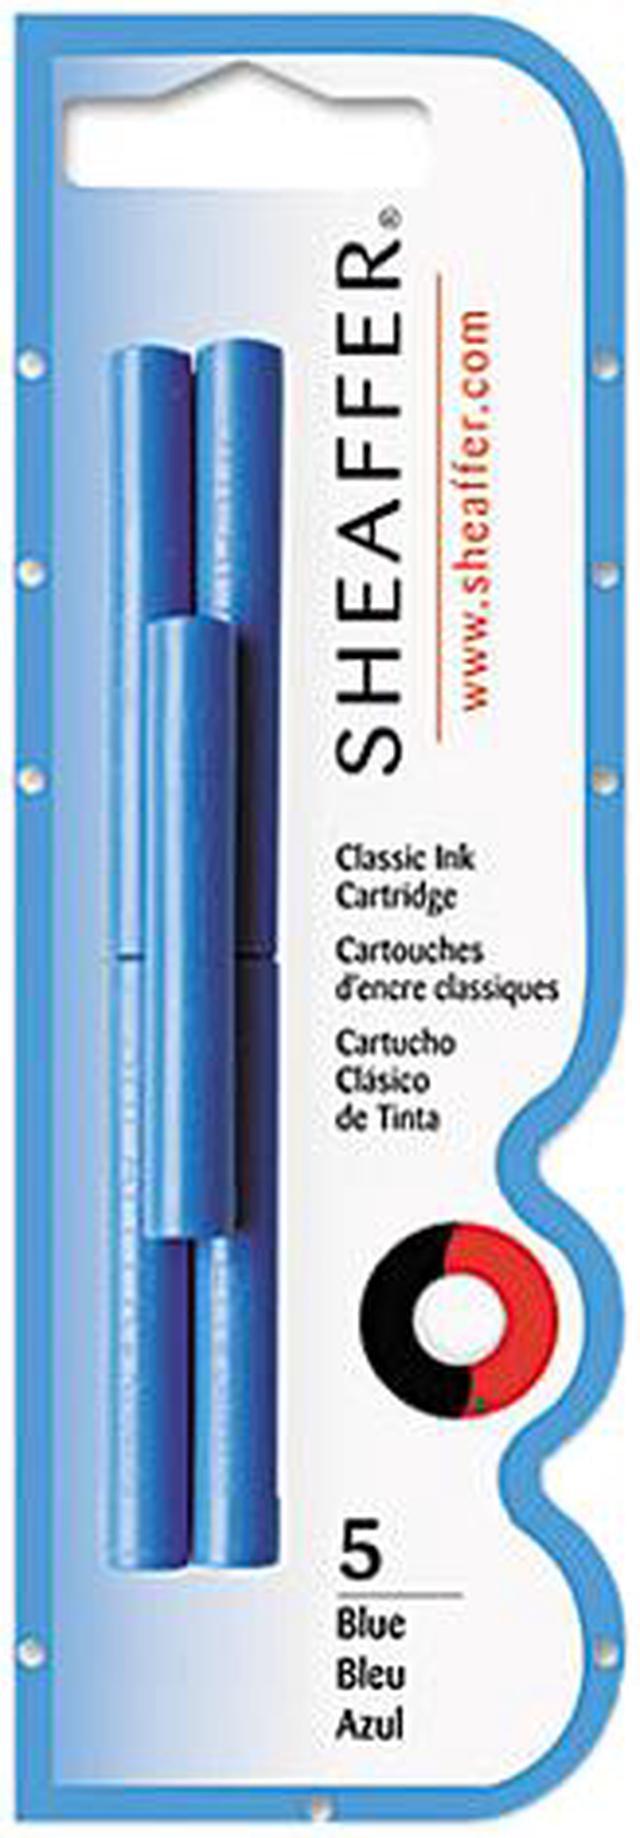 Sheaffer Skrip Fountain Pen Ink Cartridges